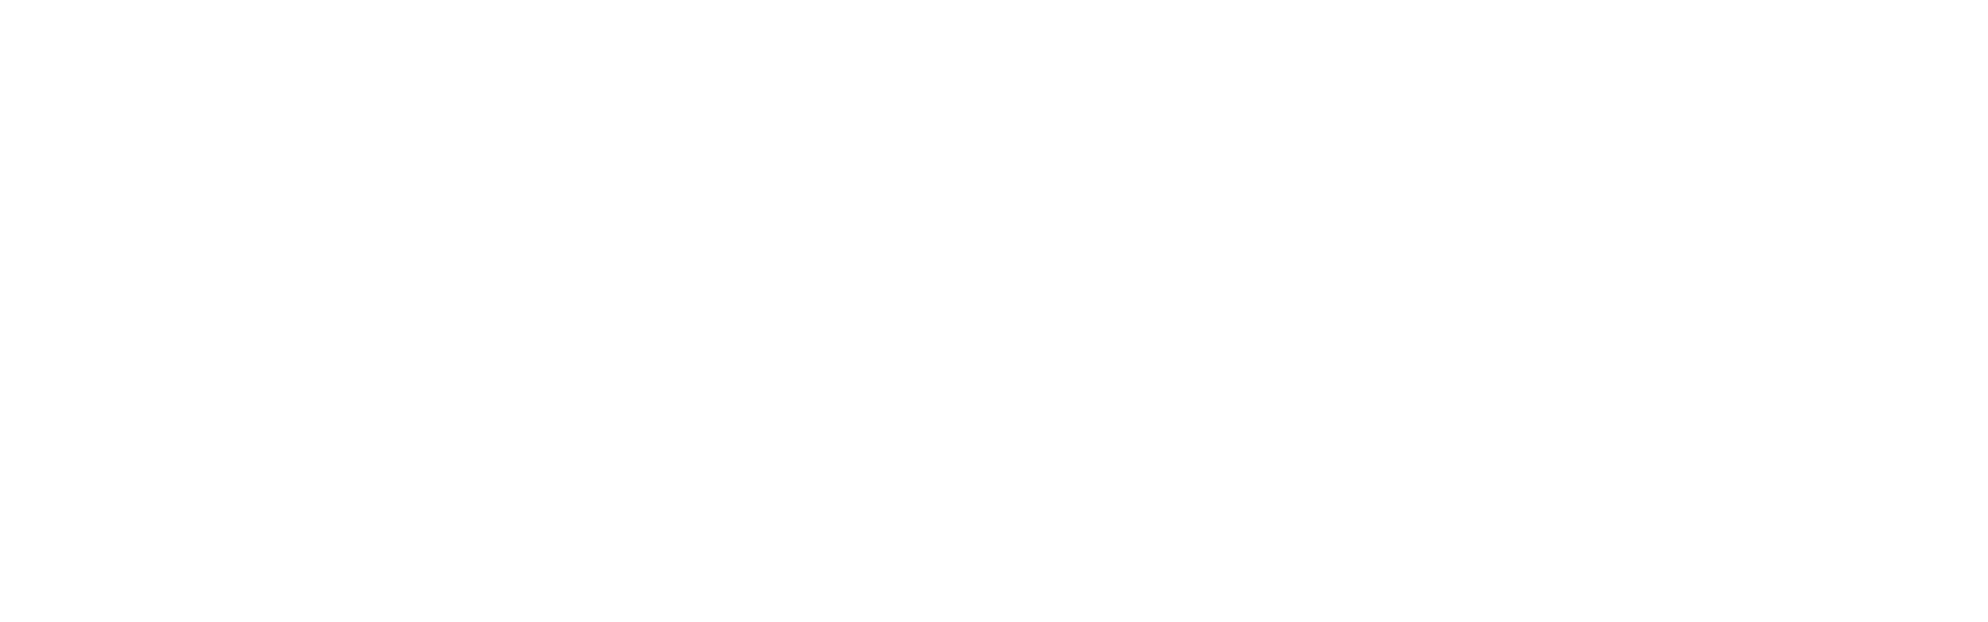 OpenFF Evaluator documentation logo